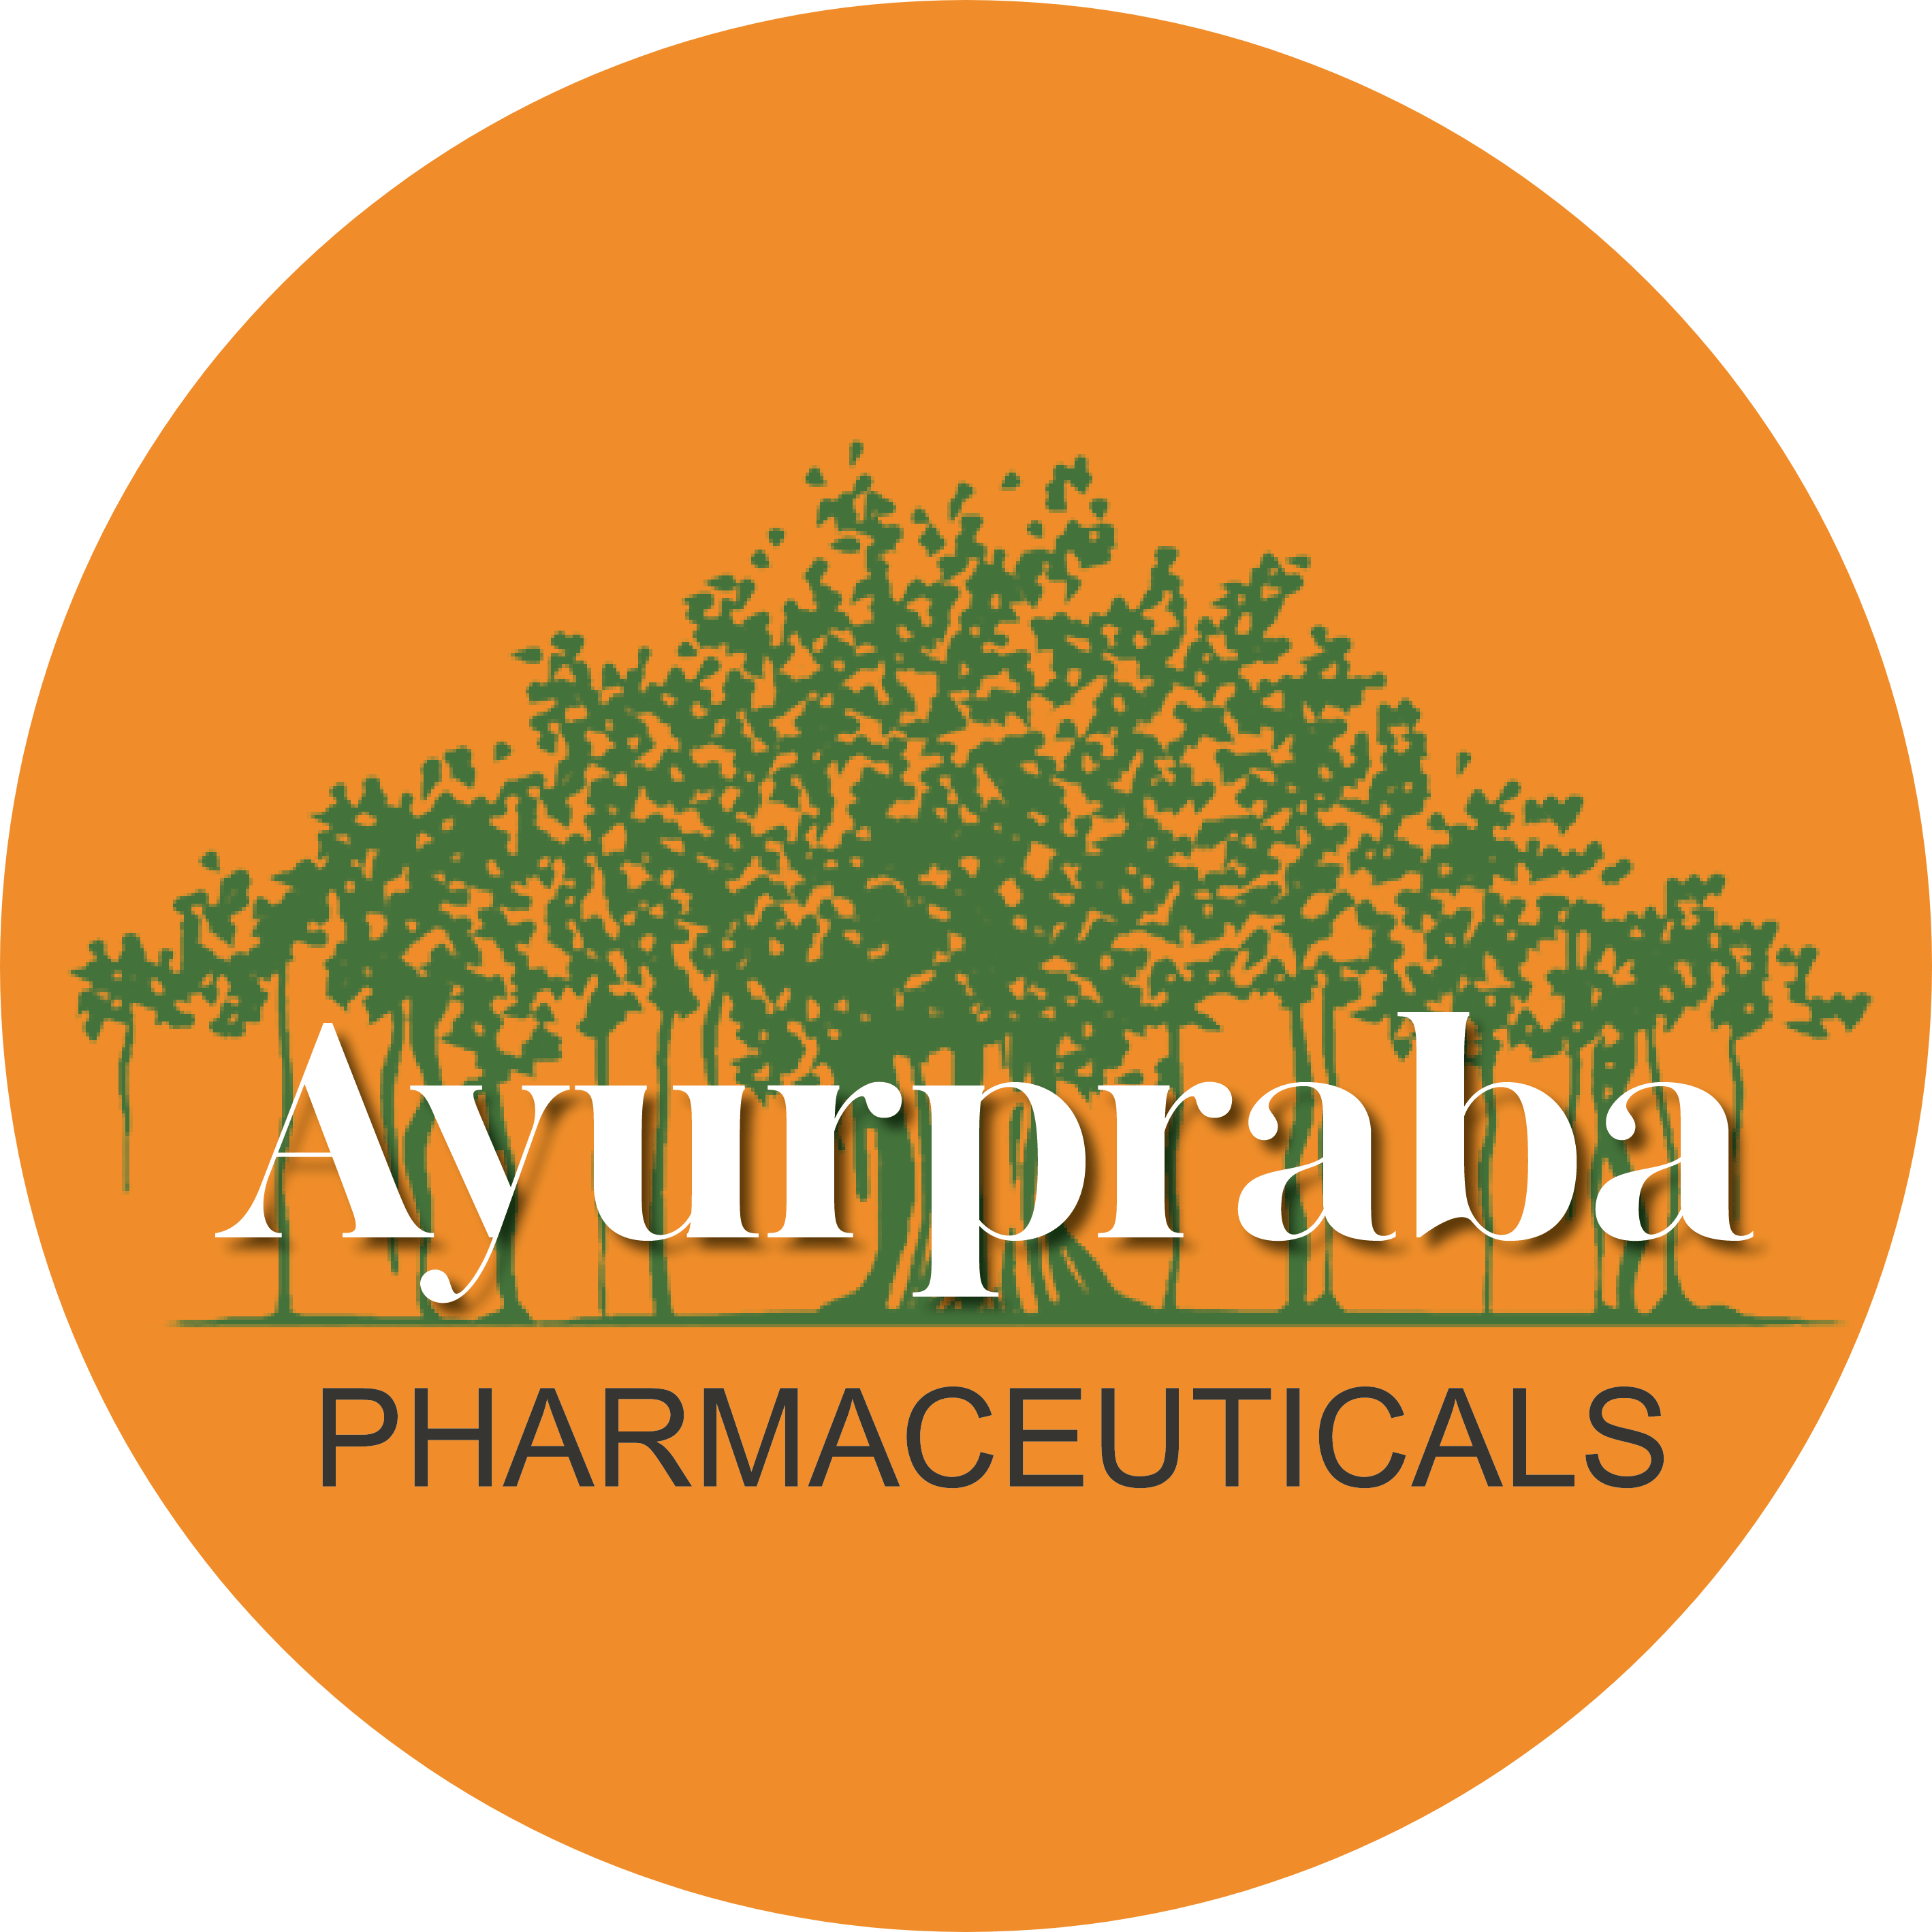 AyurPraba Pharmaceuticals